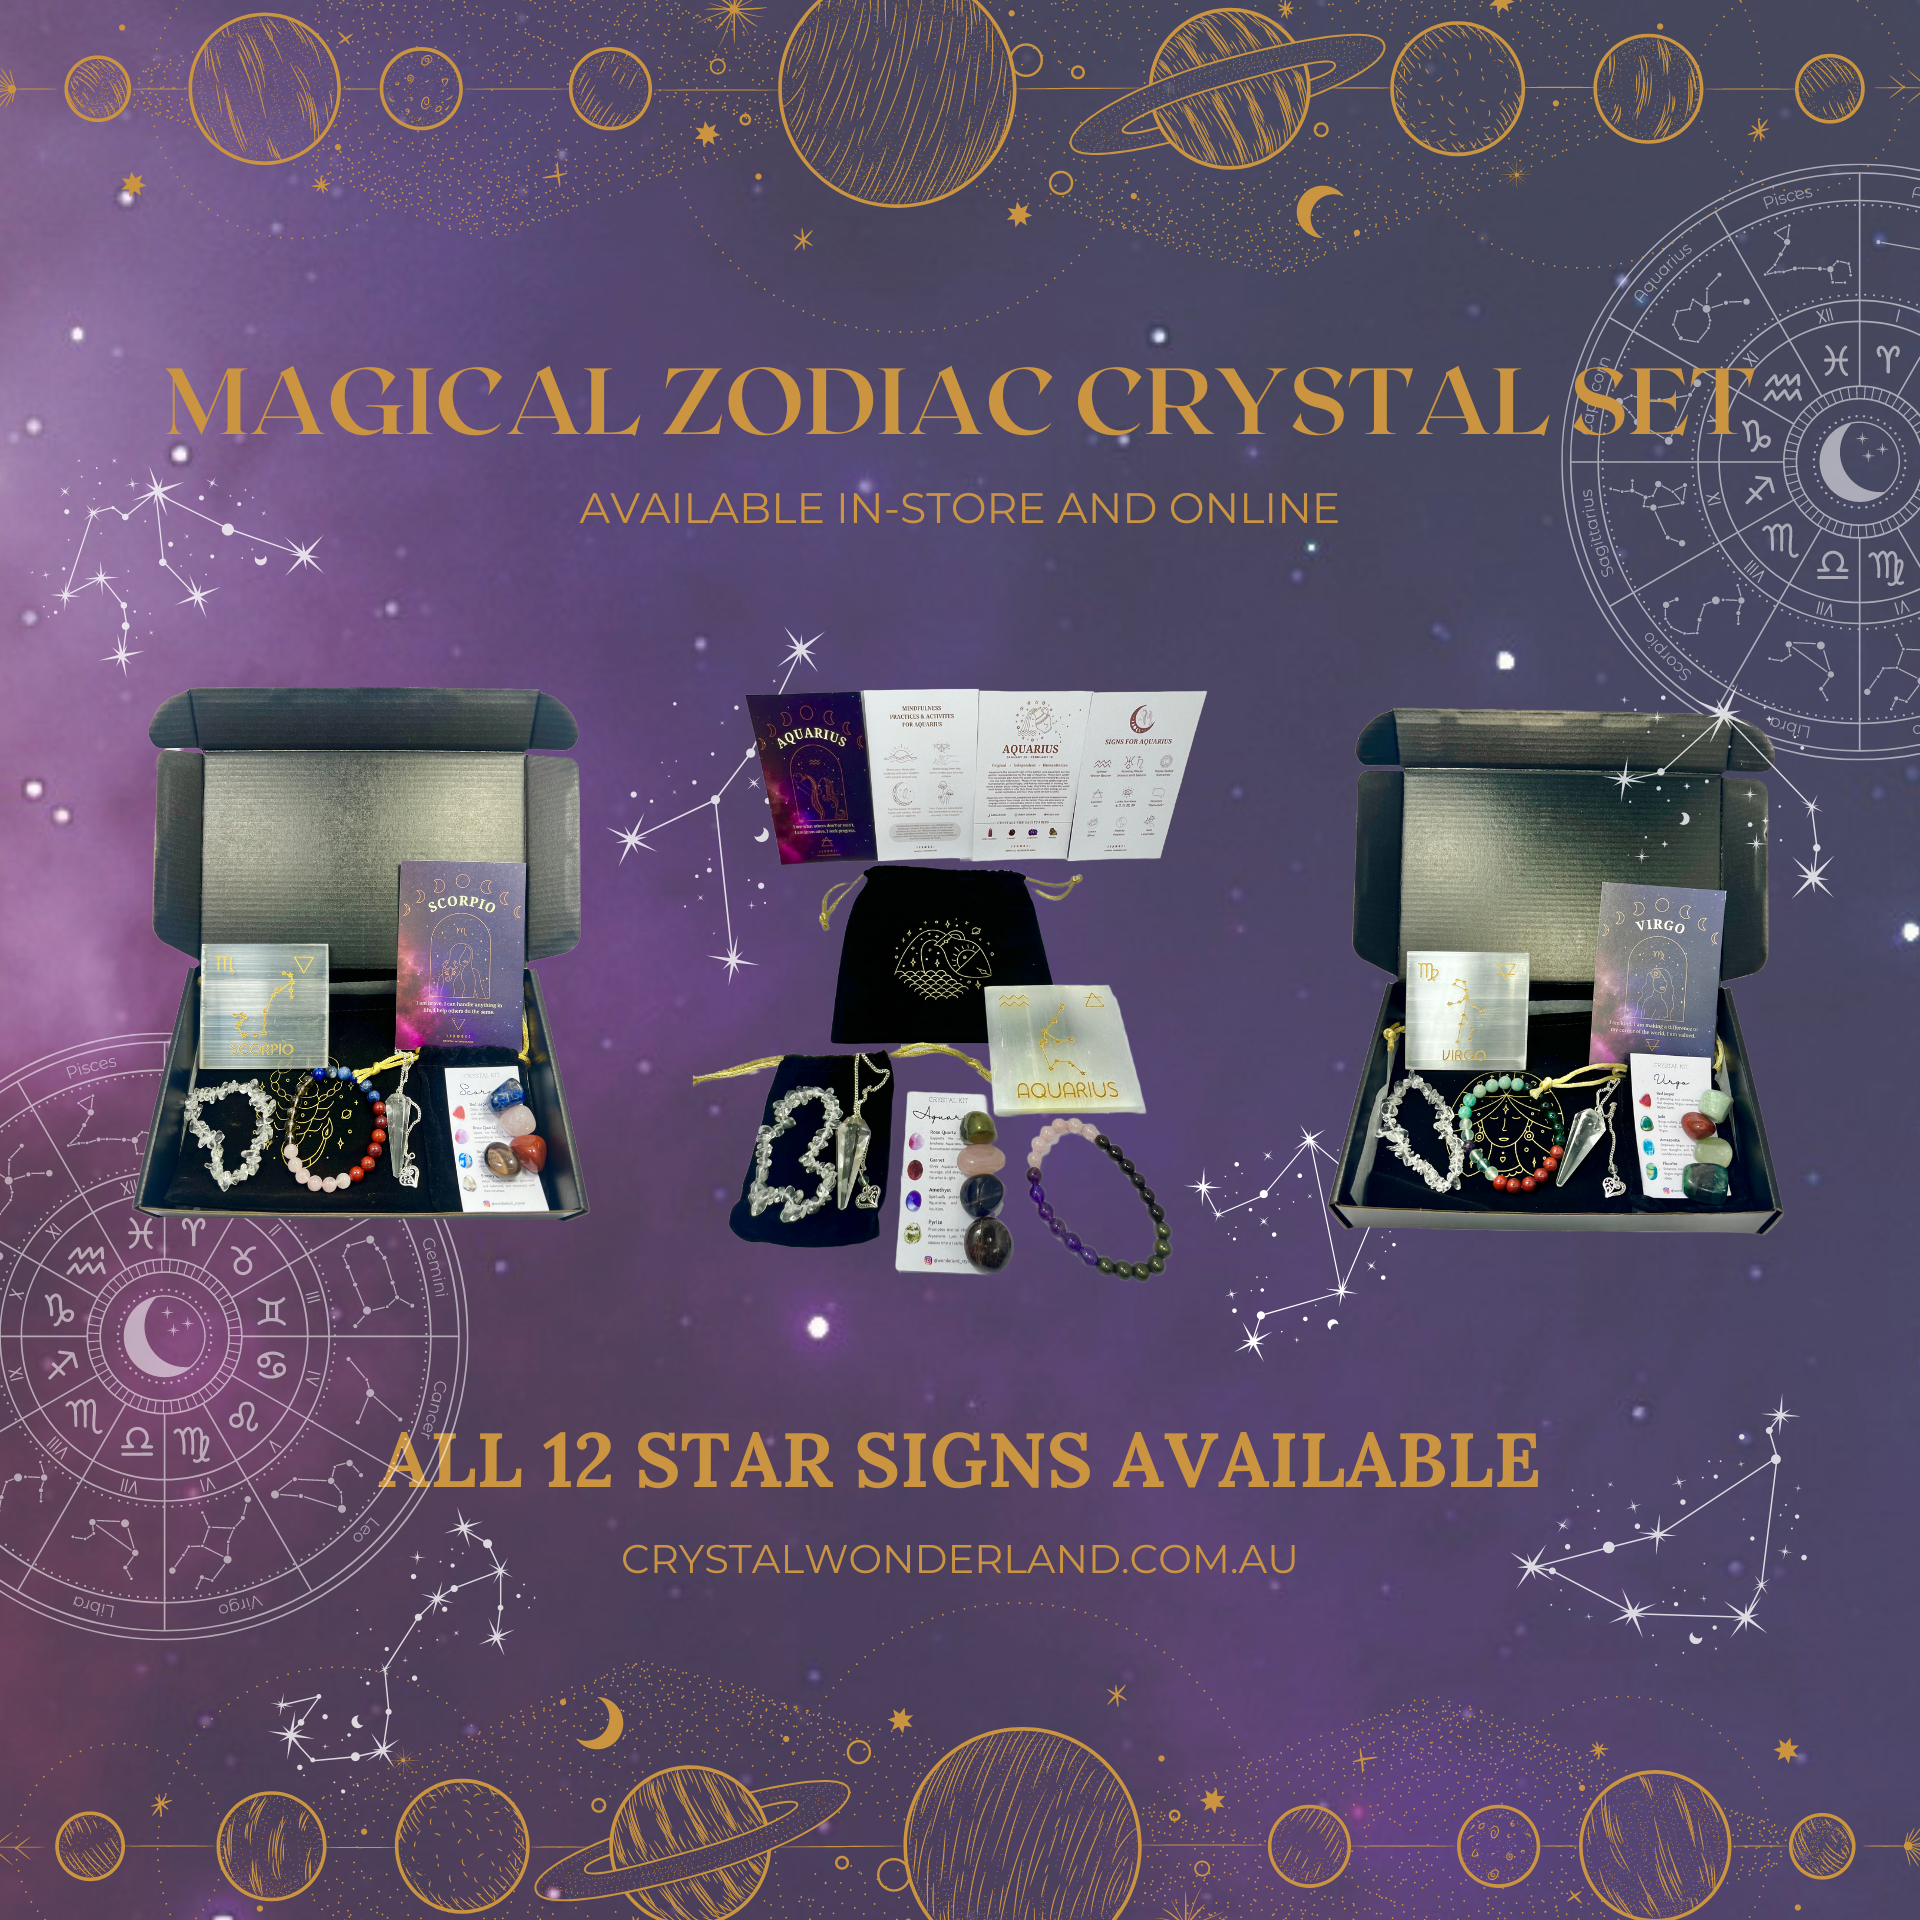 Crystal Wonderland Zodiac Crystal Set Cancer